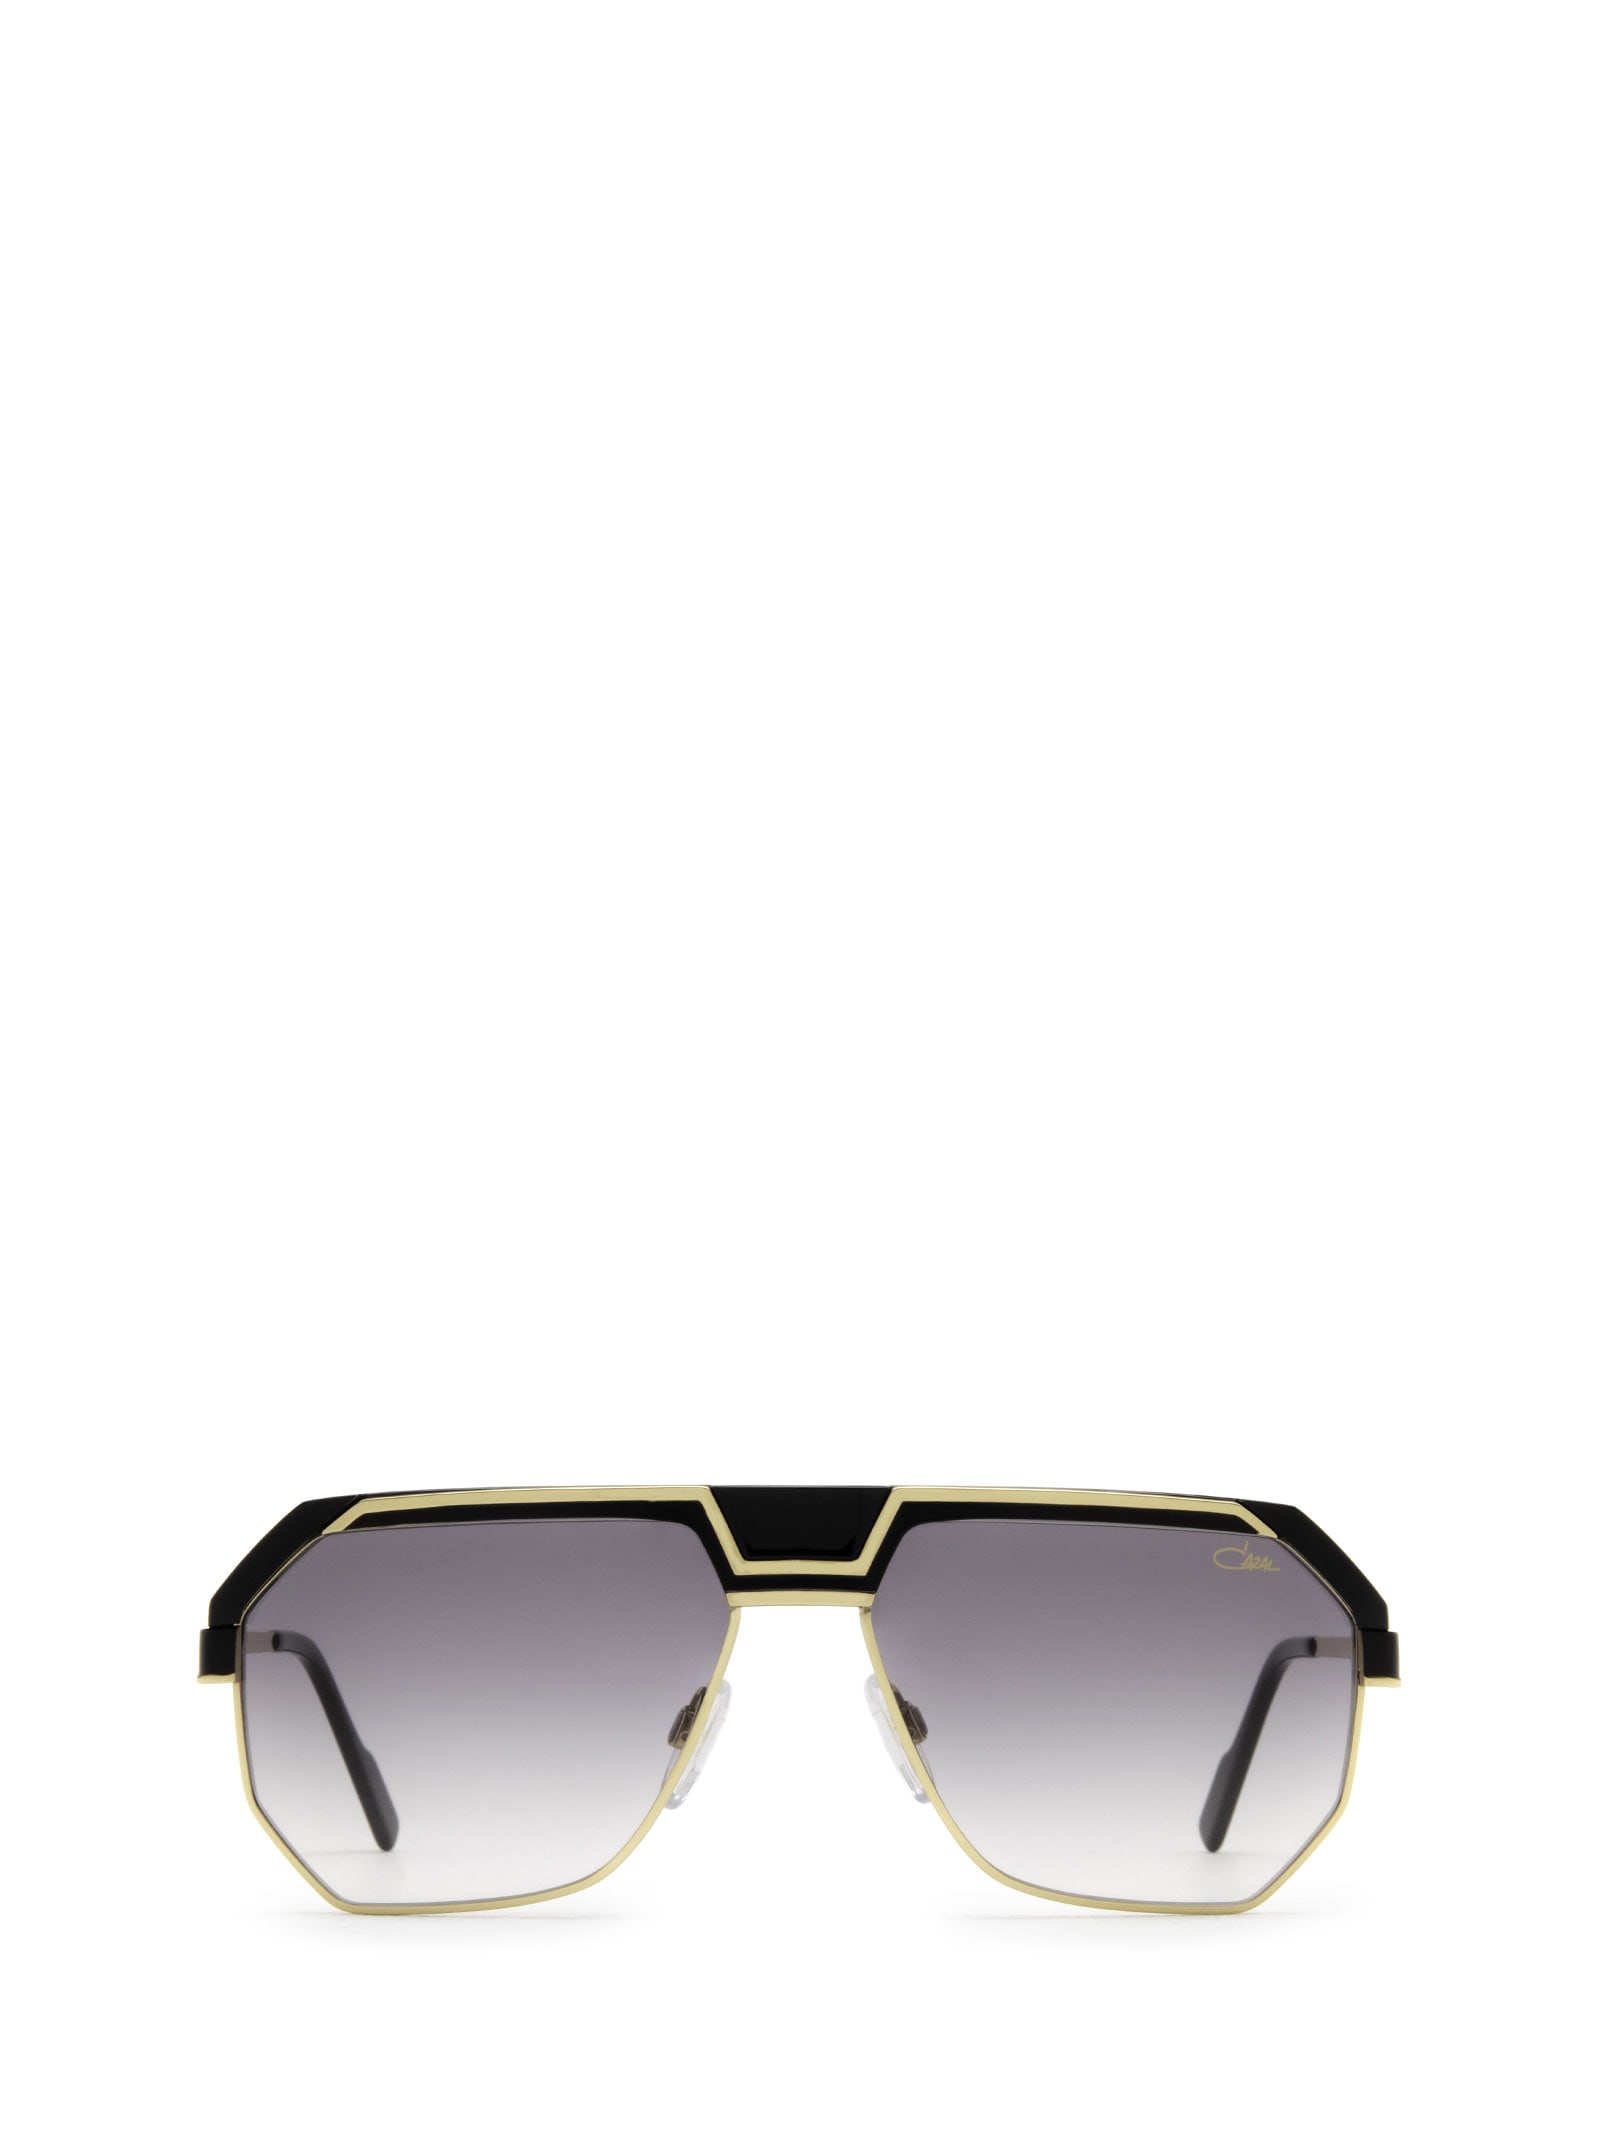 Cazal 790/3 Black - Gold Sunglasses